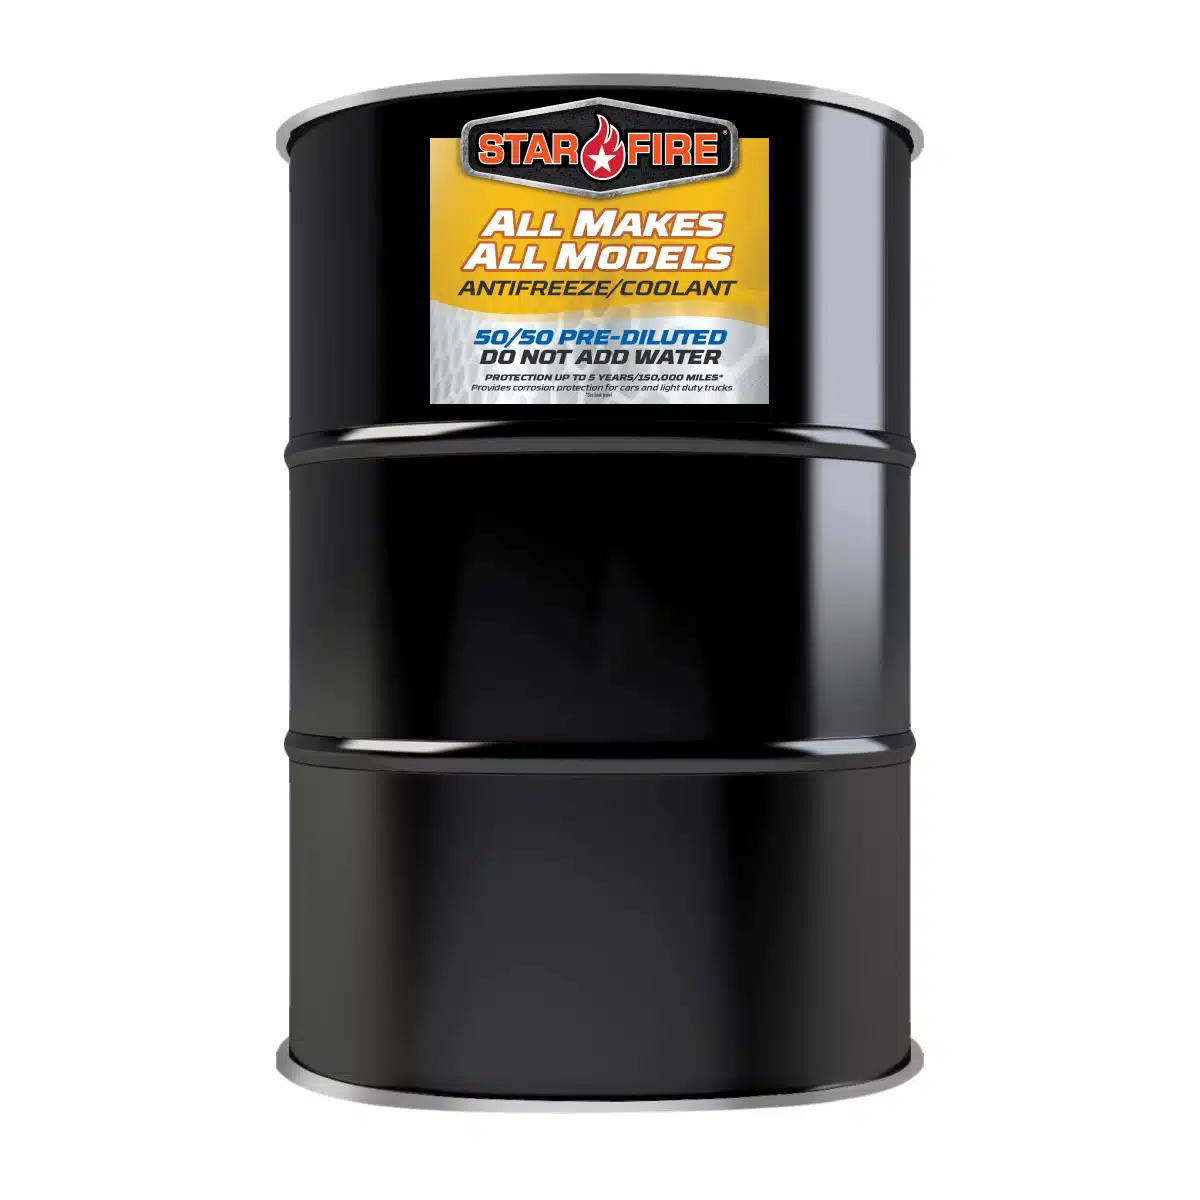 All Makes All Models Antifreeze Coolant 55 gallon drum